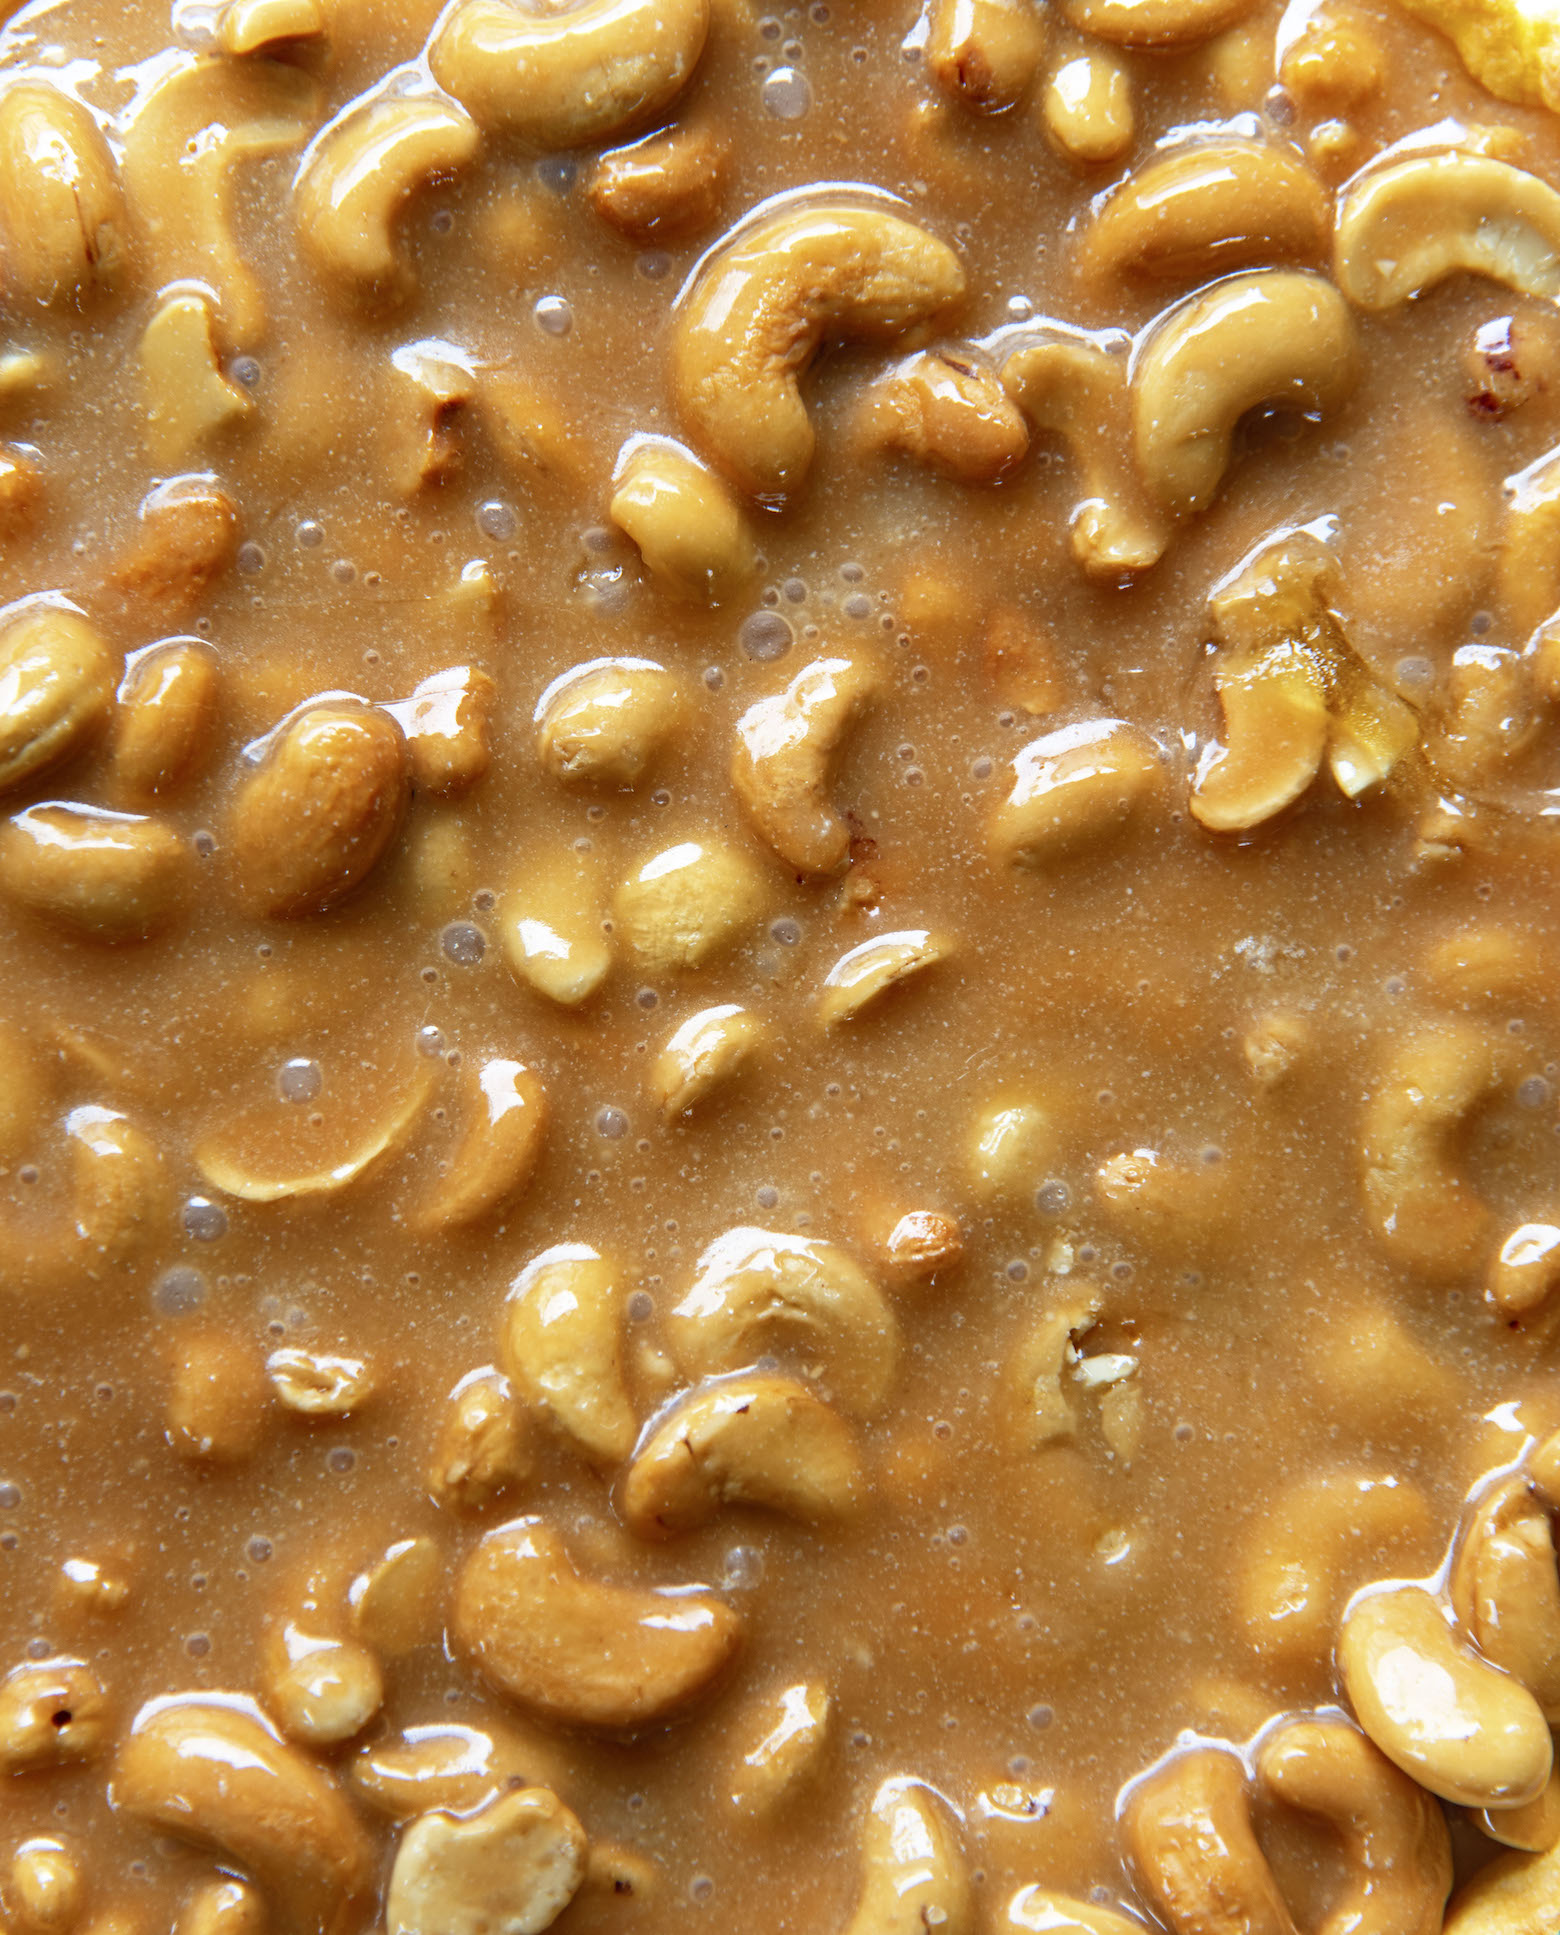 Close up of the caramel and cashews